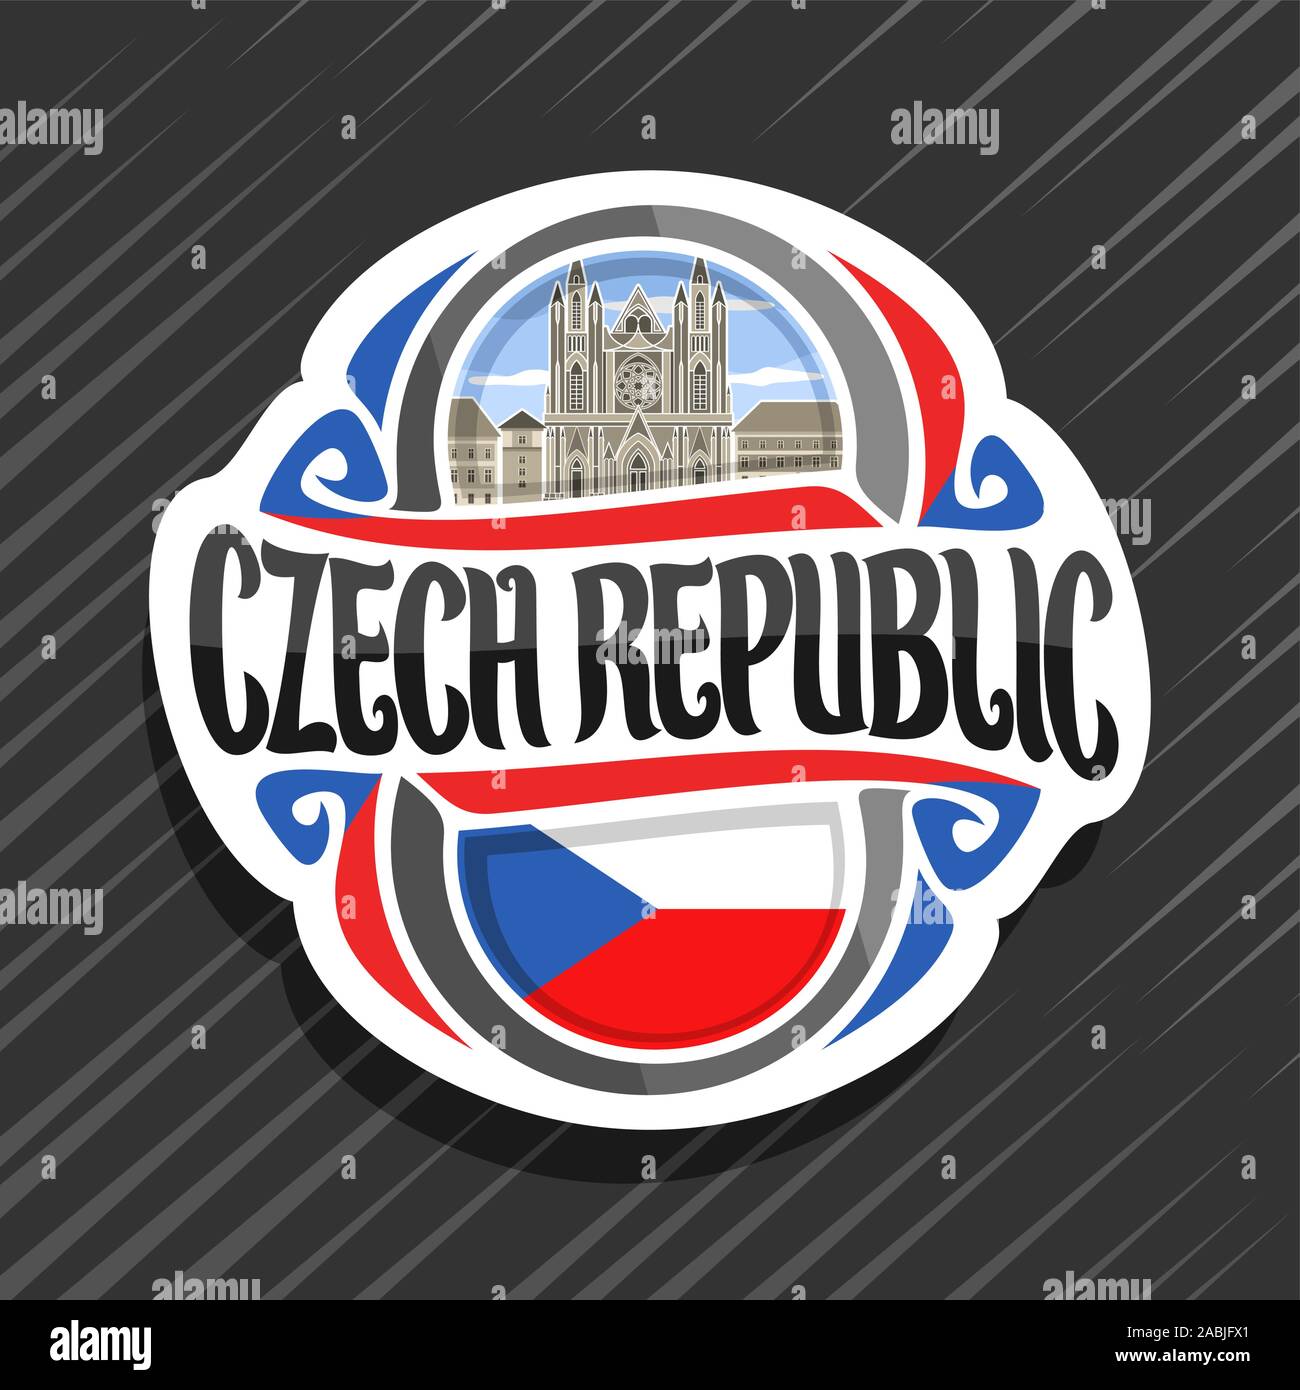 Vector logo for Czech Republic, fridge magnet with czech state flag, original brush typeface for words czech republic and national symbol - St. Vitus Stock Vector